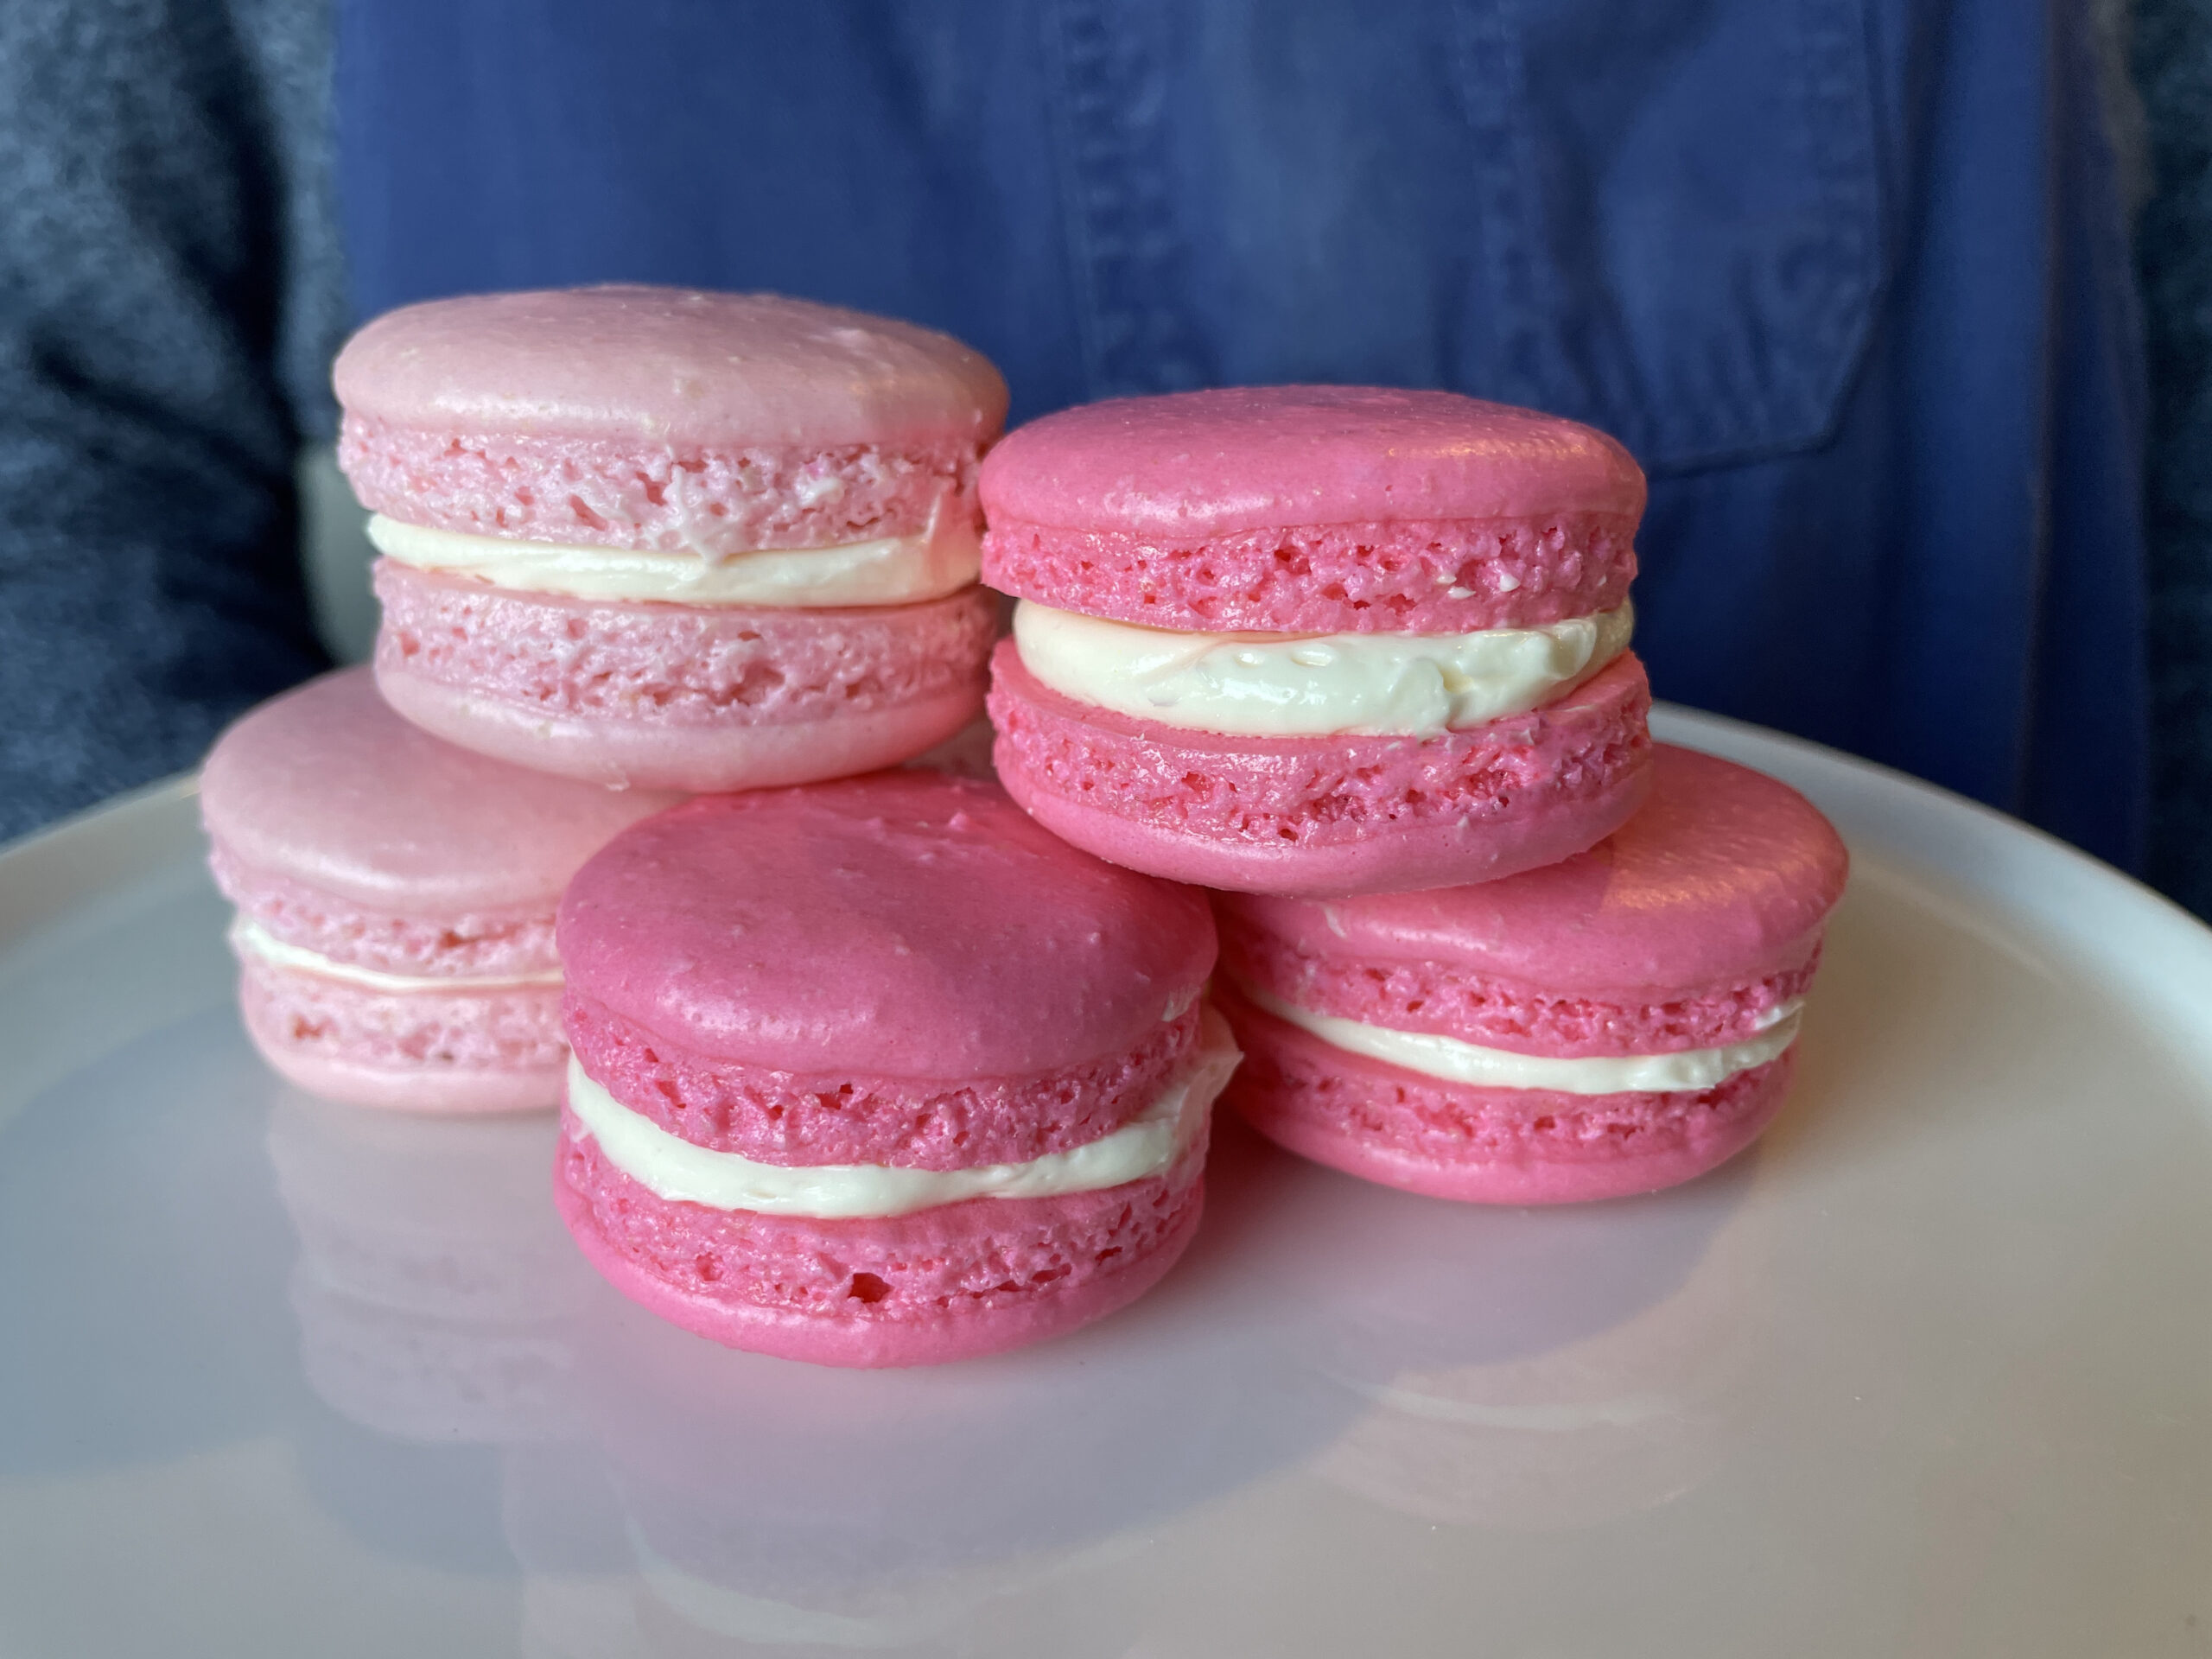 Plate of pink macarons